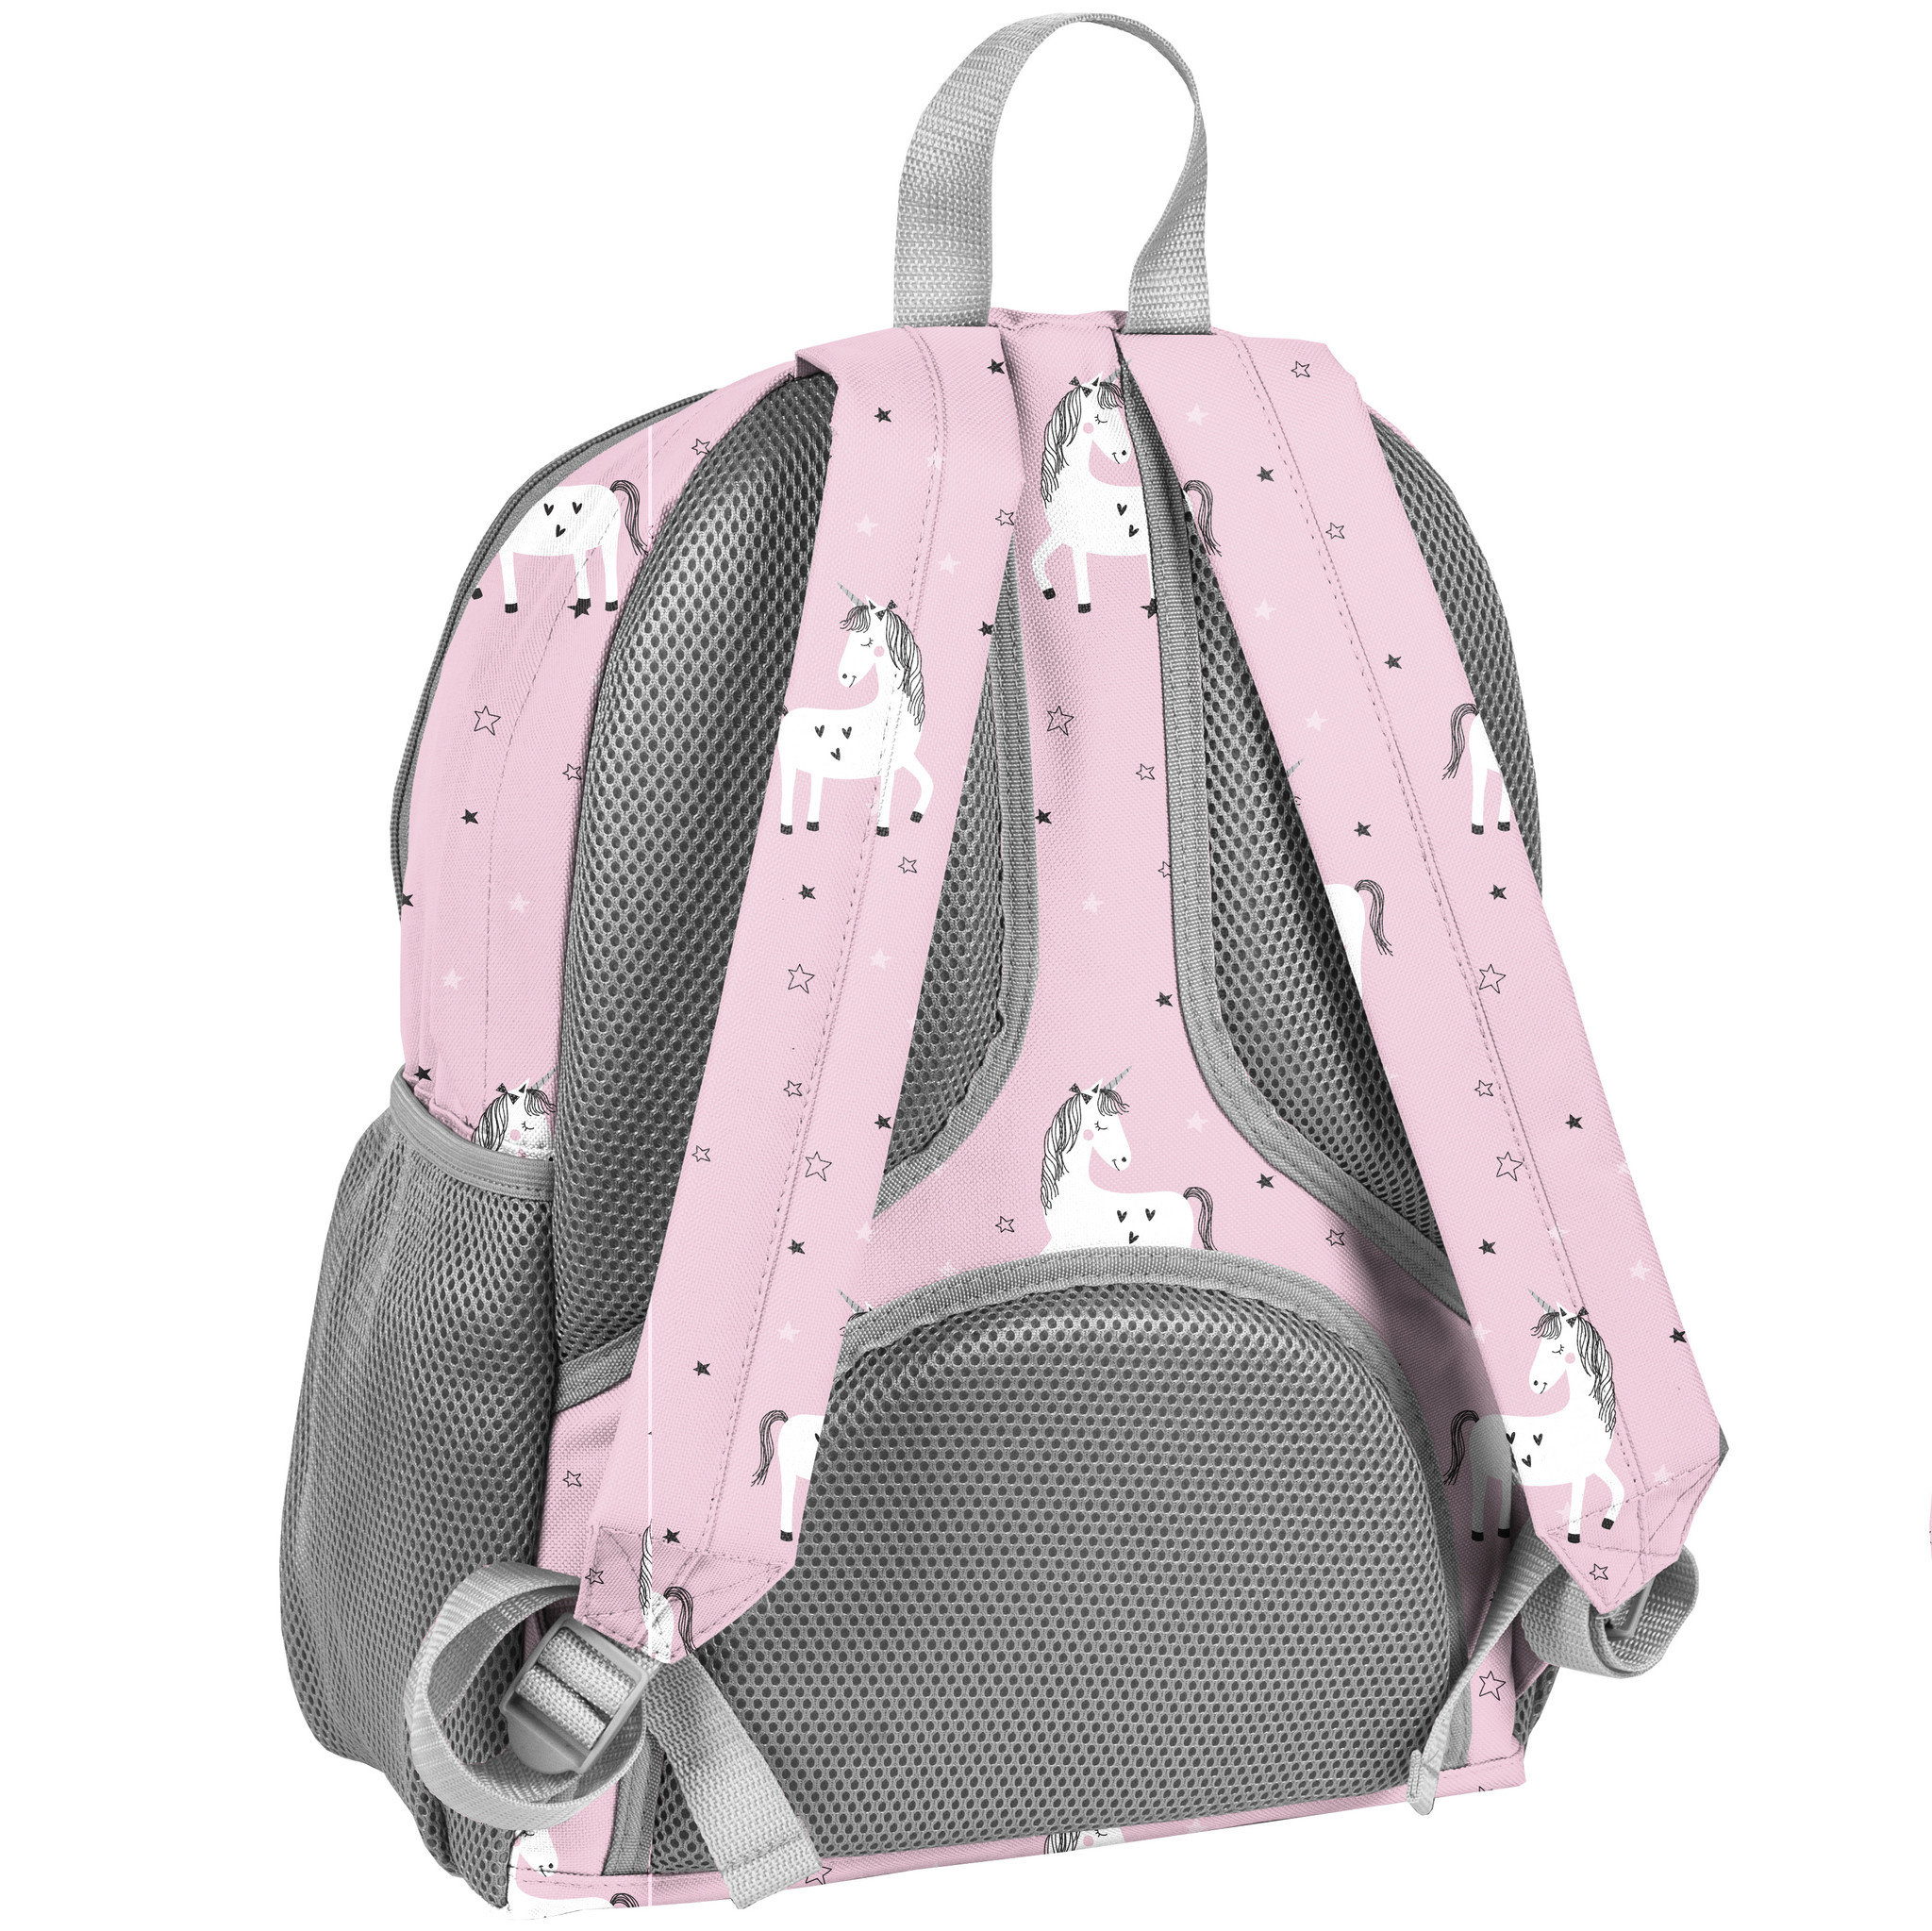 Unicorn Backpack - 41 x 28 x 18 - Pink